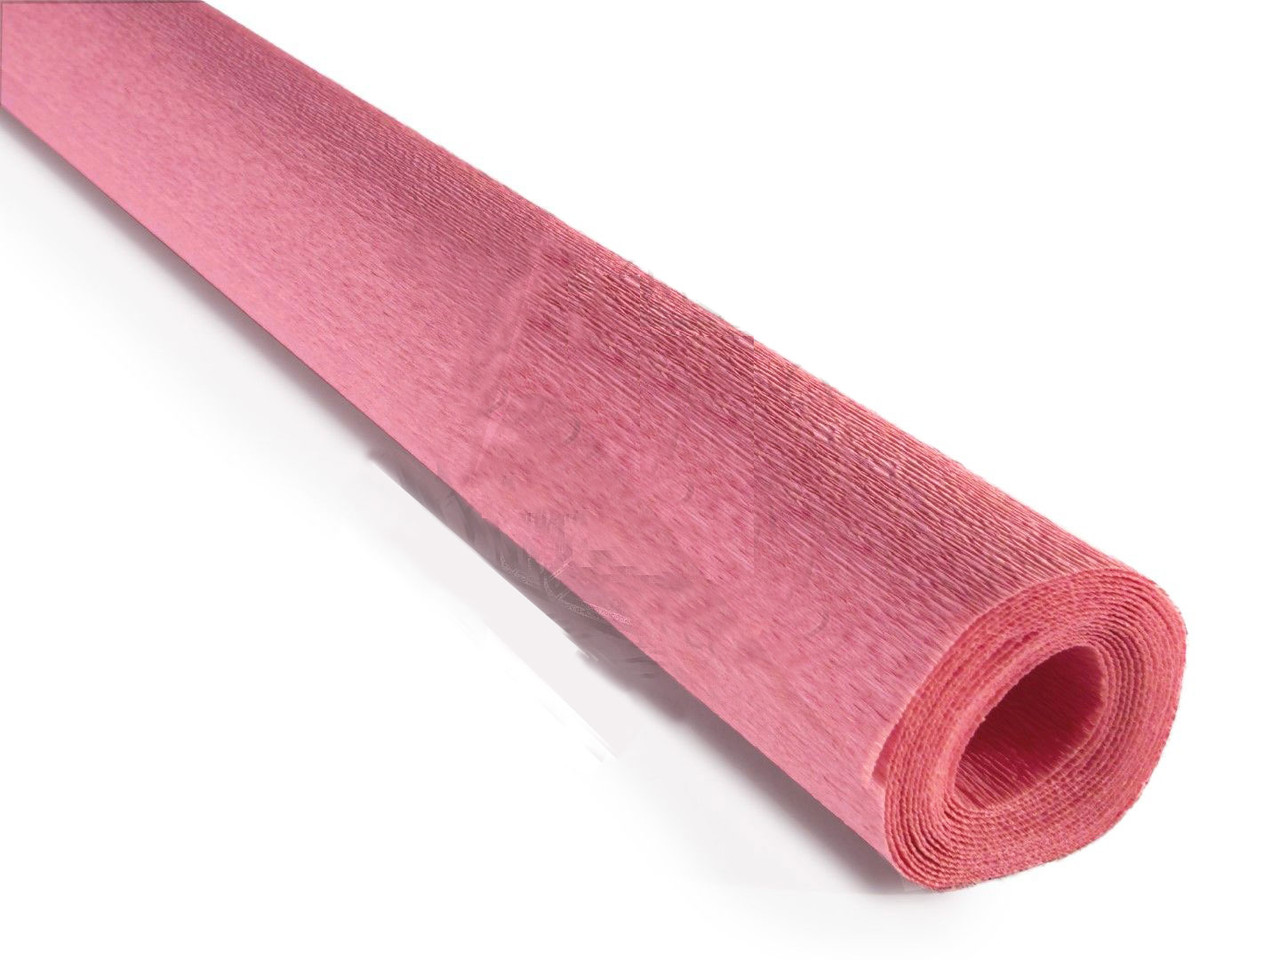 70g Premium Crepe Paper Roll for Flower Making White Green Pink Crepe Paper  Sheets Streamer,10in Width, 8ft Length (Rose)